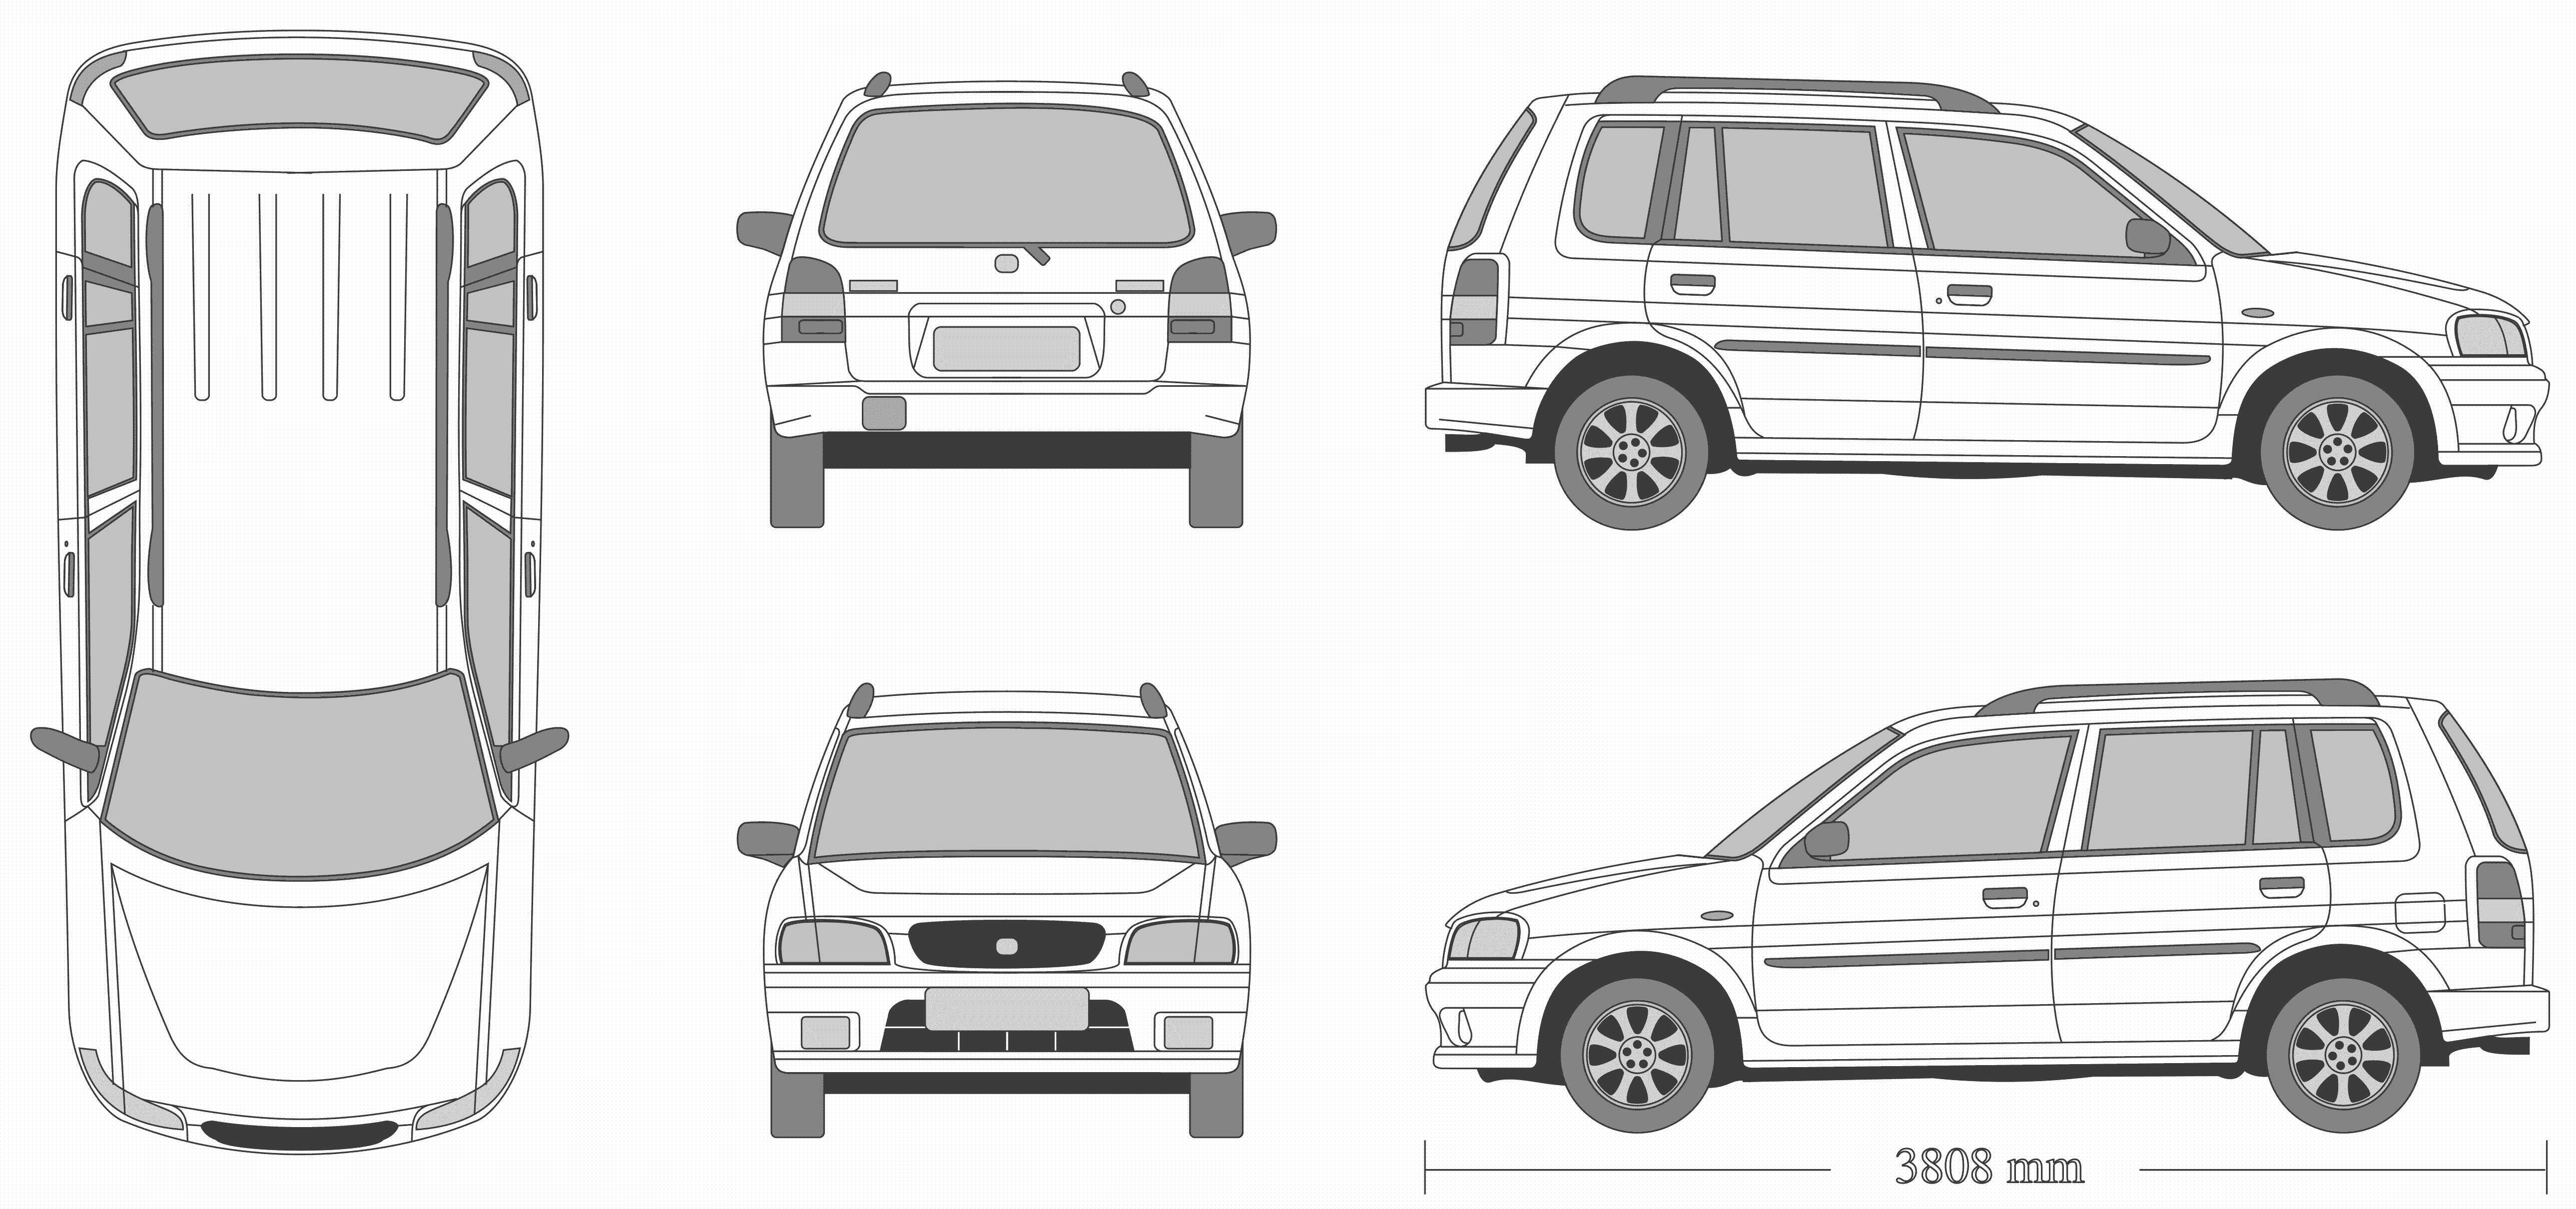 Mazda Demio blueprint